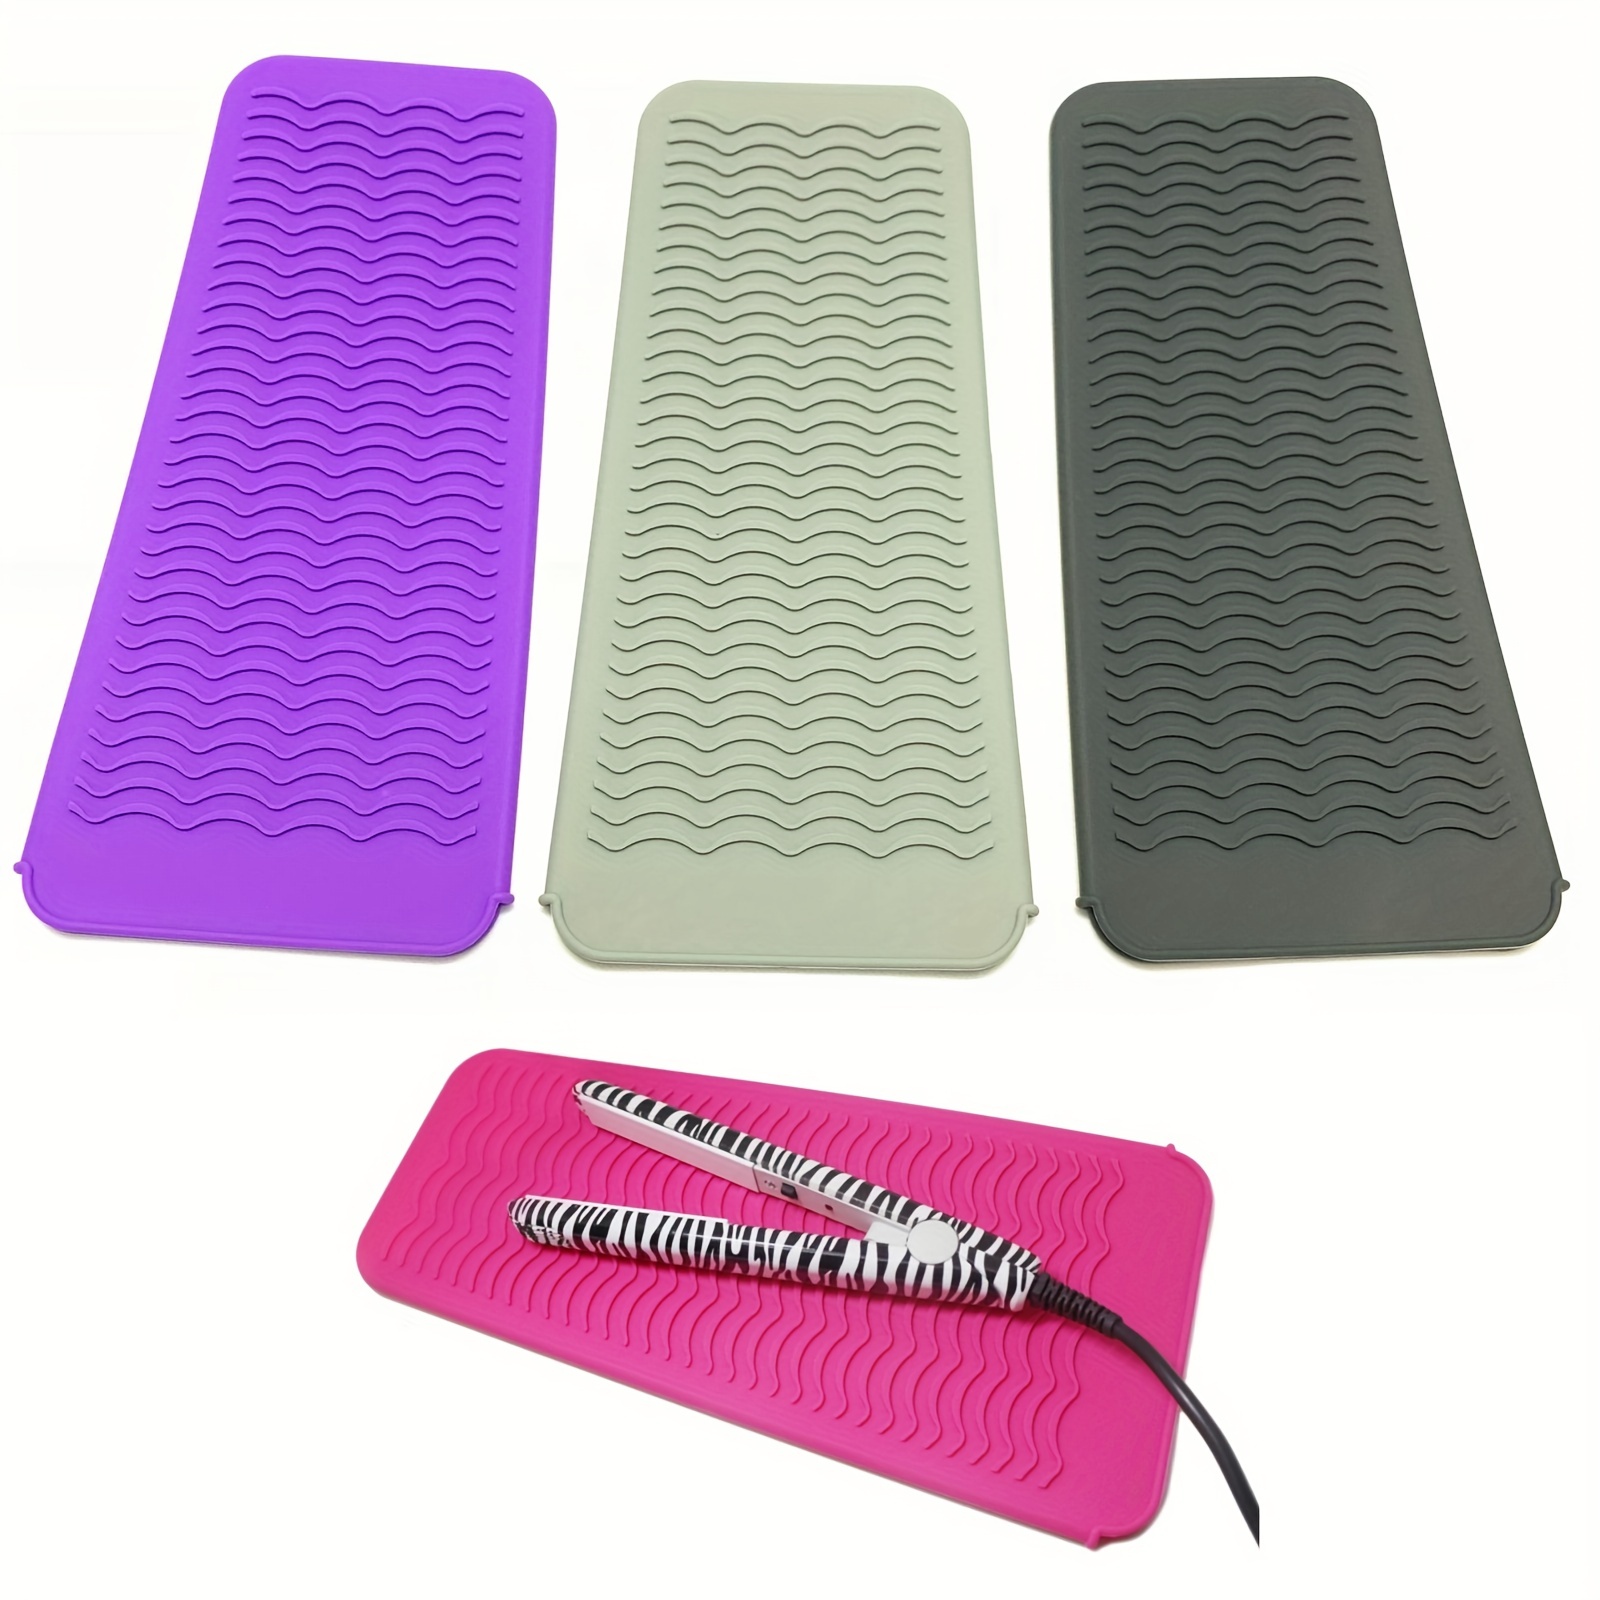 Silicone Heat Resistant Mat for Hair Tools,Pink Flat Iron Mat,Black Curling  Iron Mat,Heat Resistant Silicone Mat for Hair Tools,Travel Portable Hot